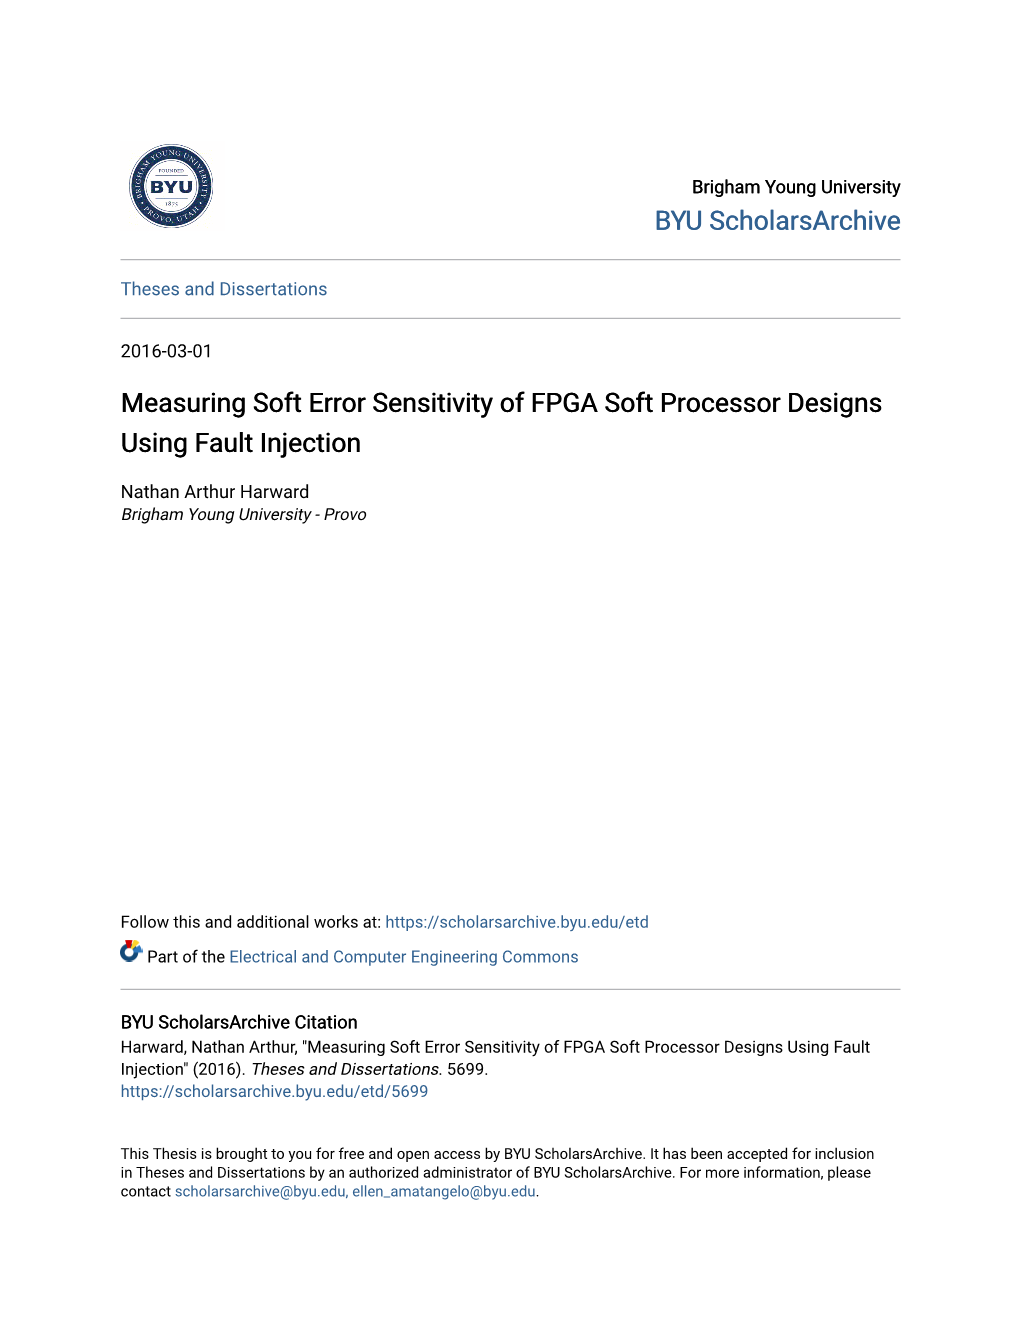 Measuring Soft Error Sensitivity of FPGA Soft Processor Designs Using Fault Injection